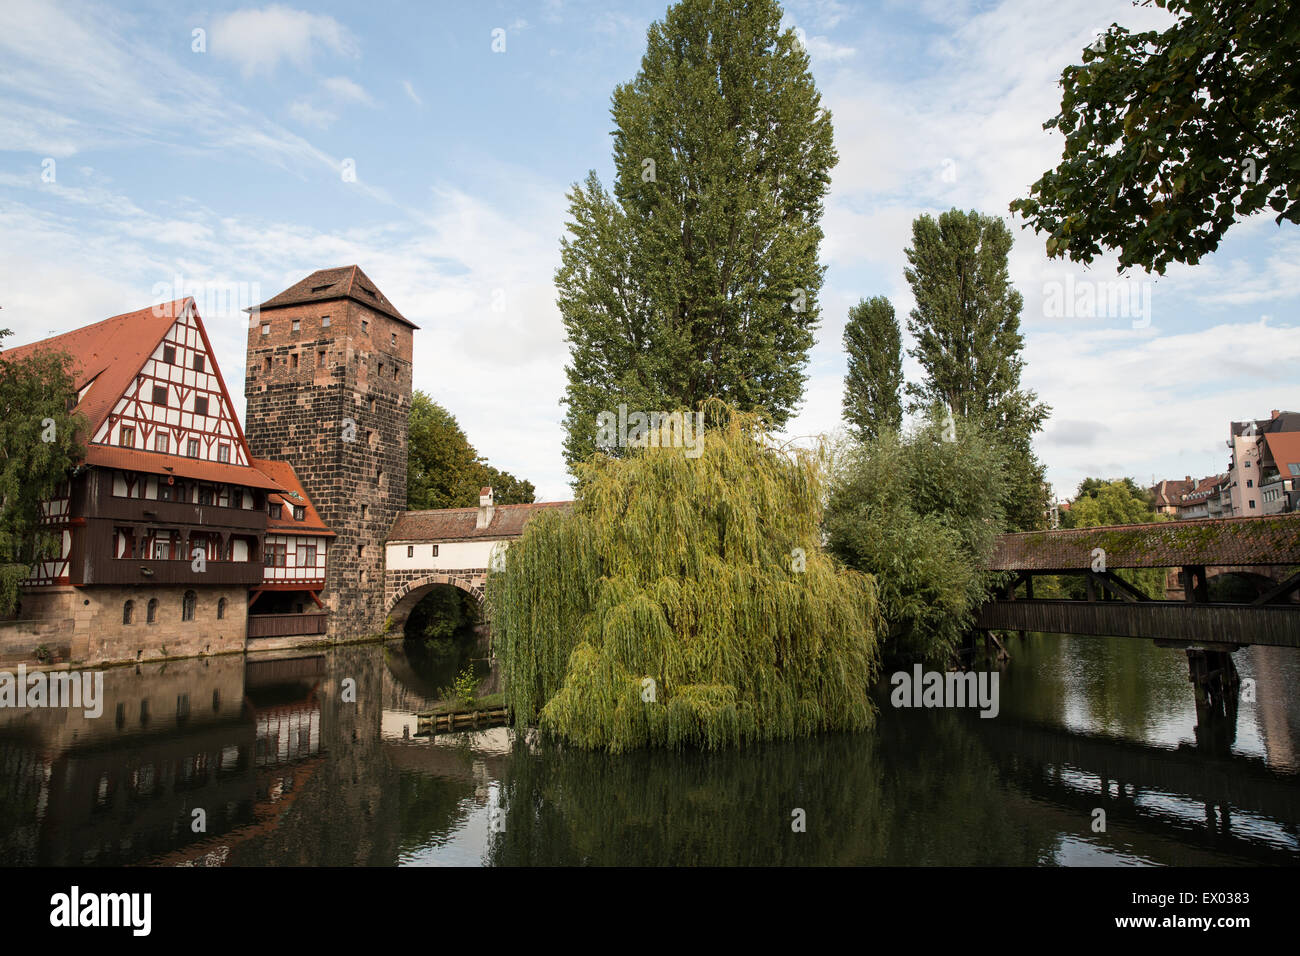 View of bridge in old town, Nuremberg, Germany Stock Photo